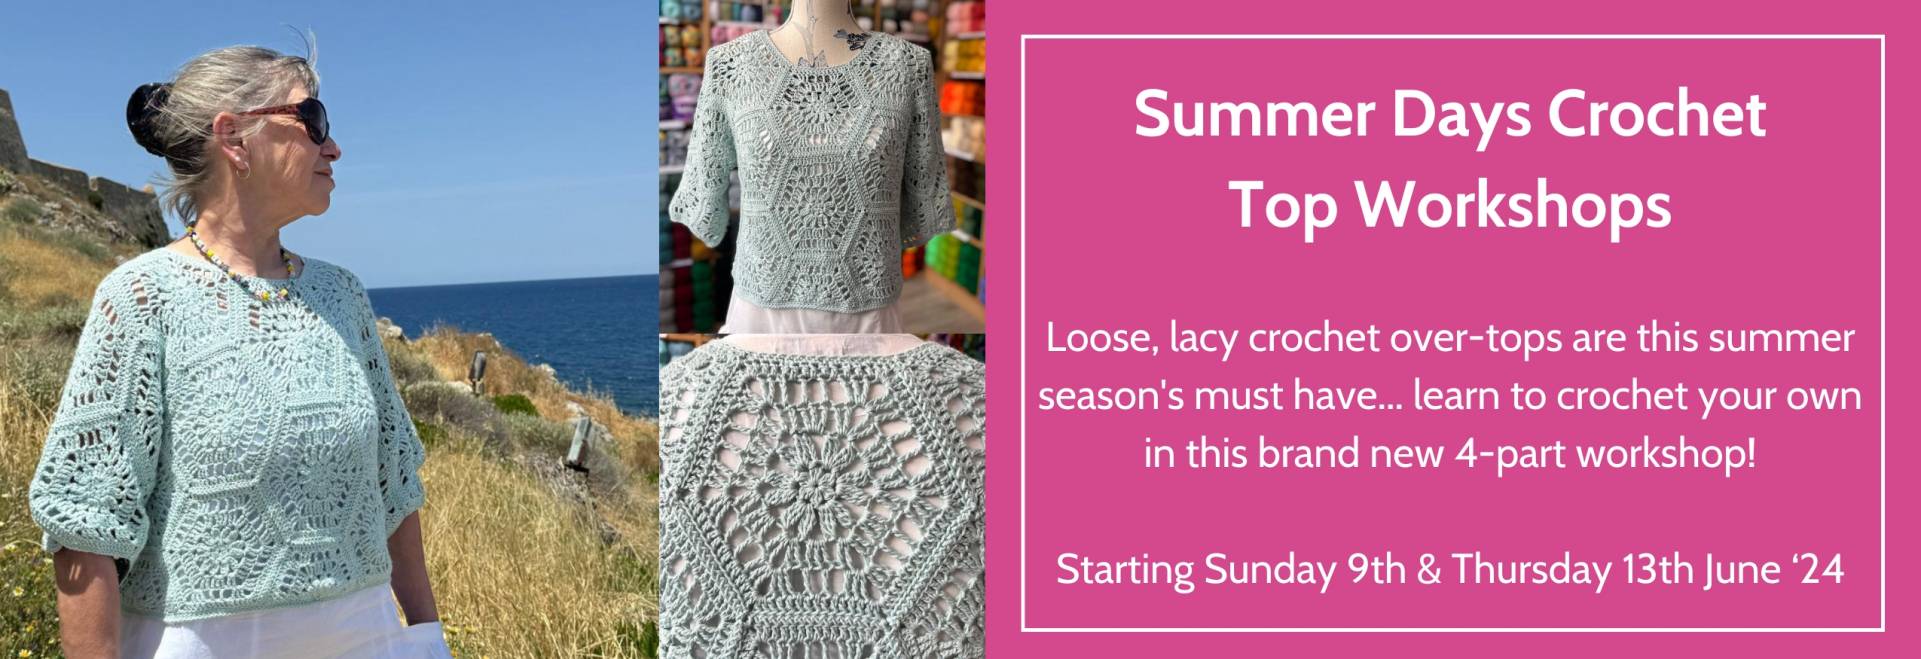 Summer Days Crochet Top Workshop Banner